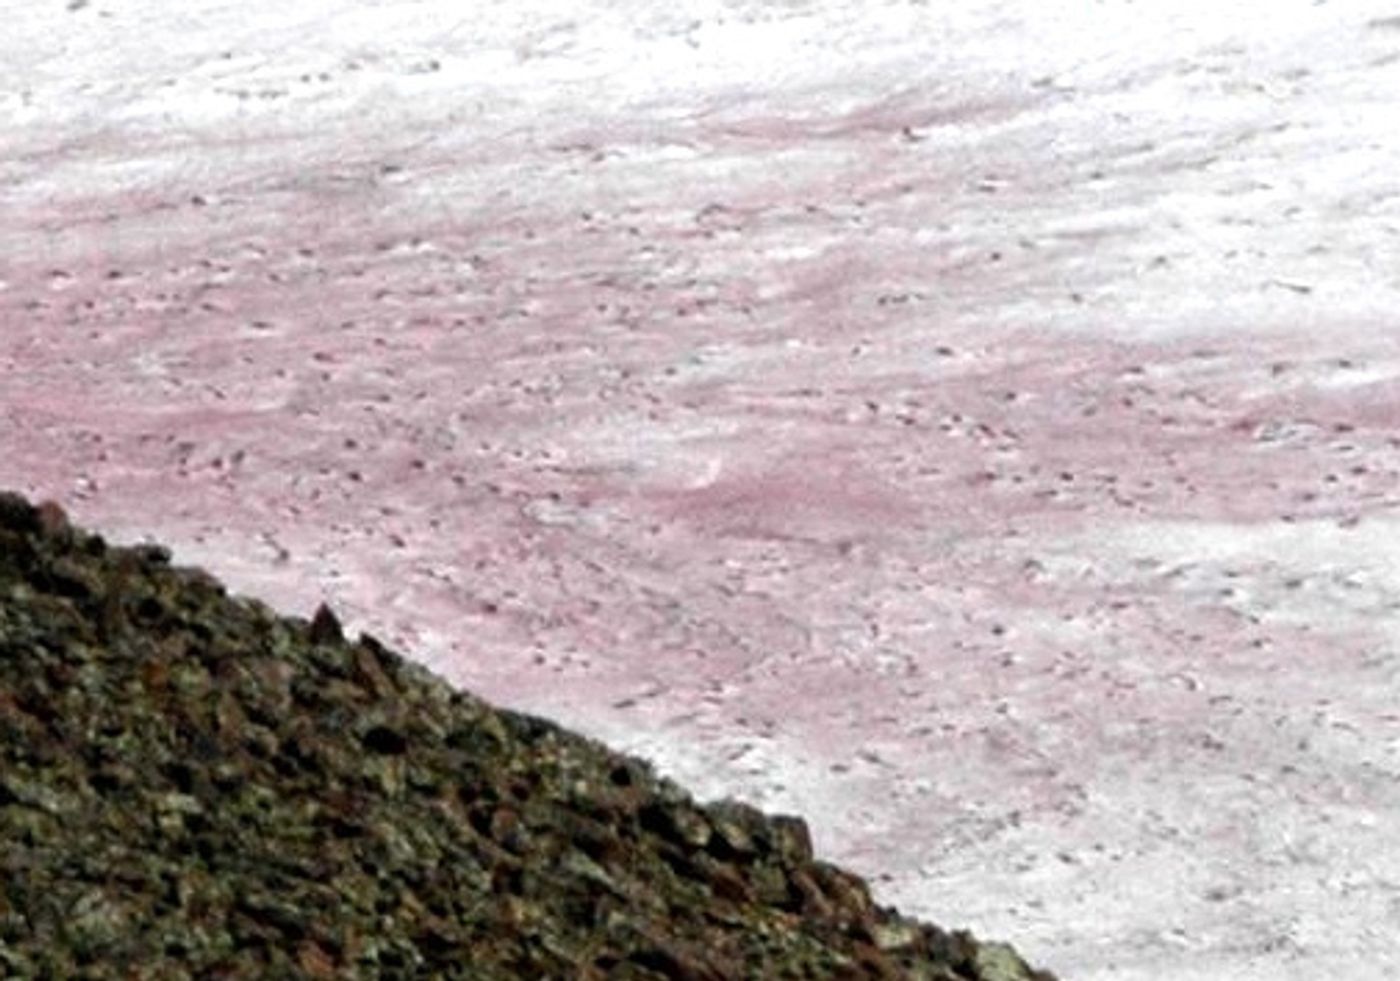 An image of snow reddened by algae